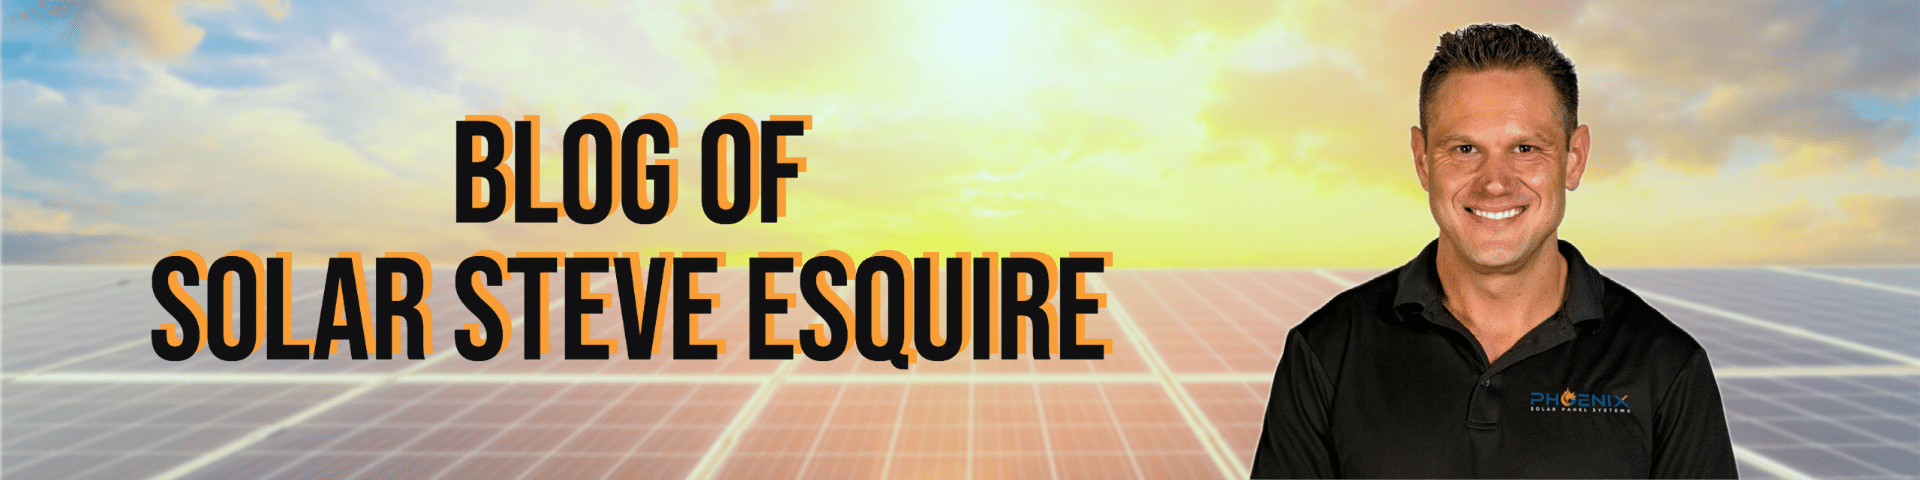 Blog of Solar Steve Esquire